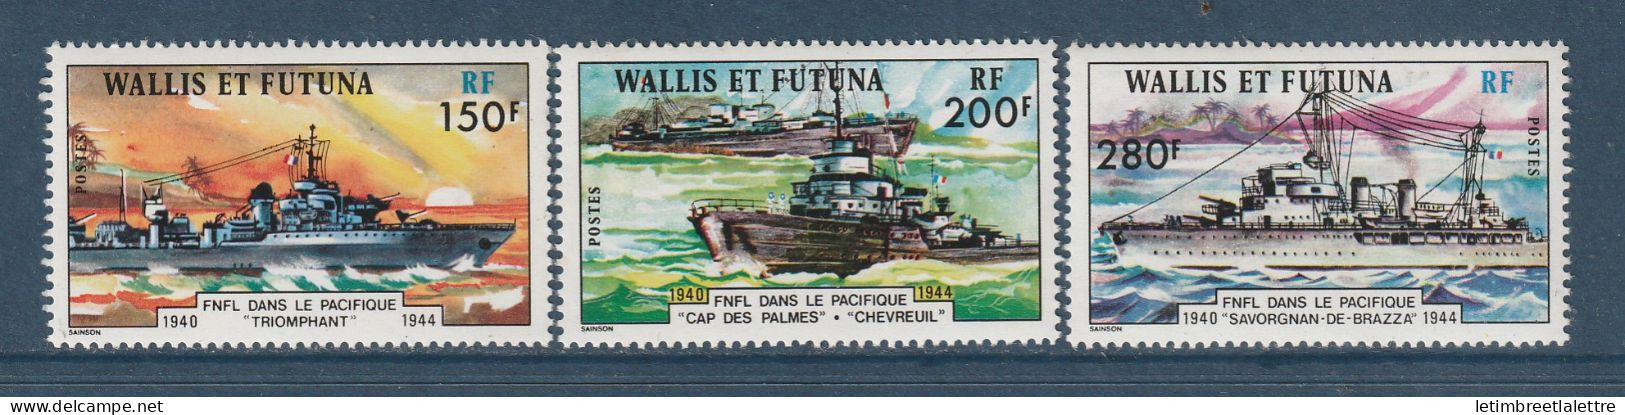 Wallis Et Futuna - YT N° 210 à 212 ** - Neuf Sans Charnière - 1978 - Neufs